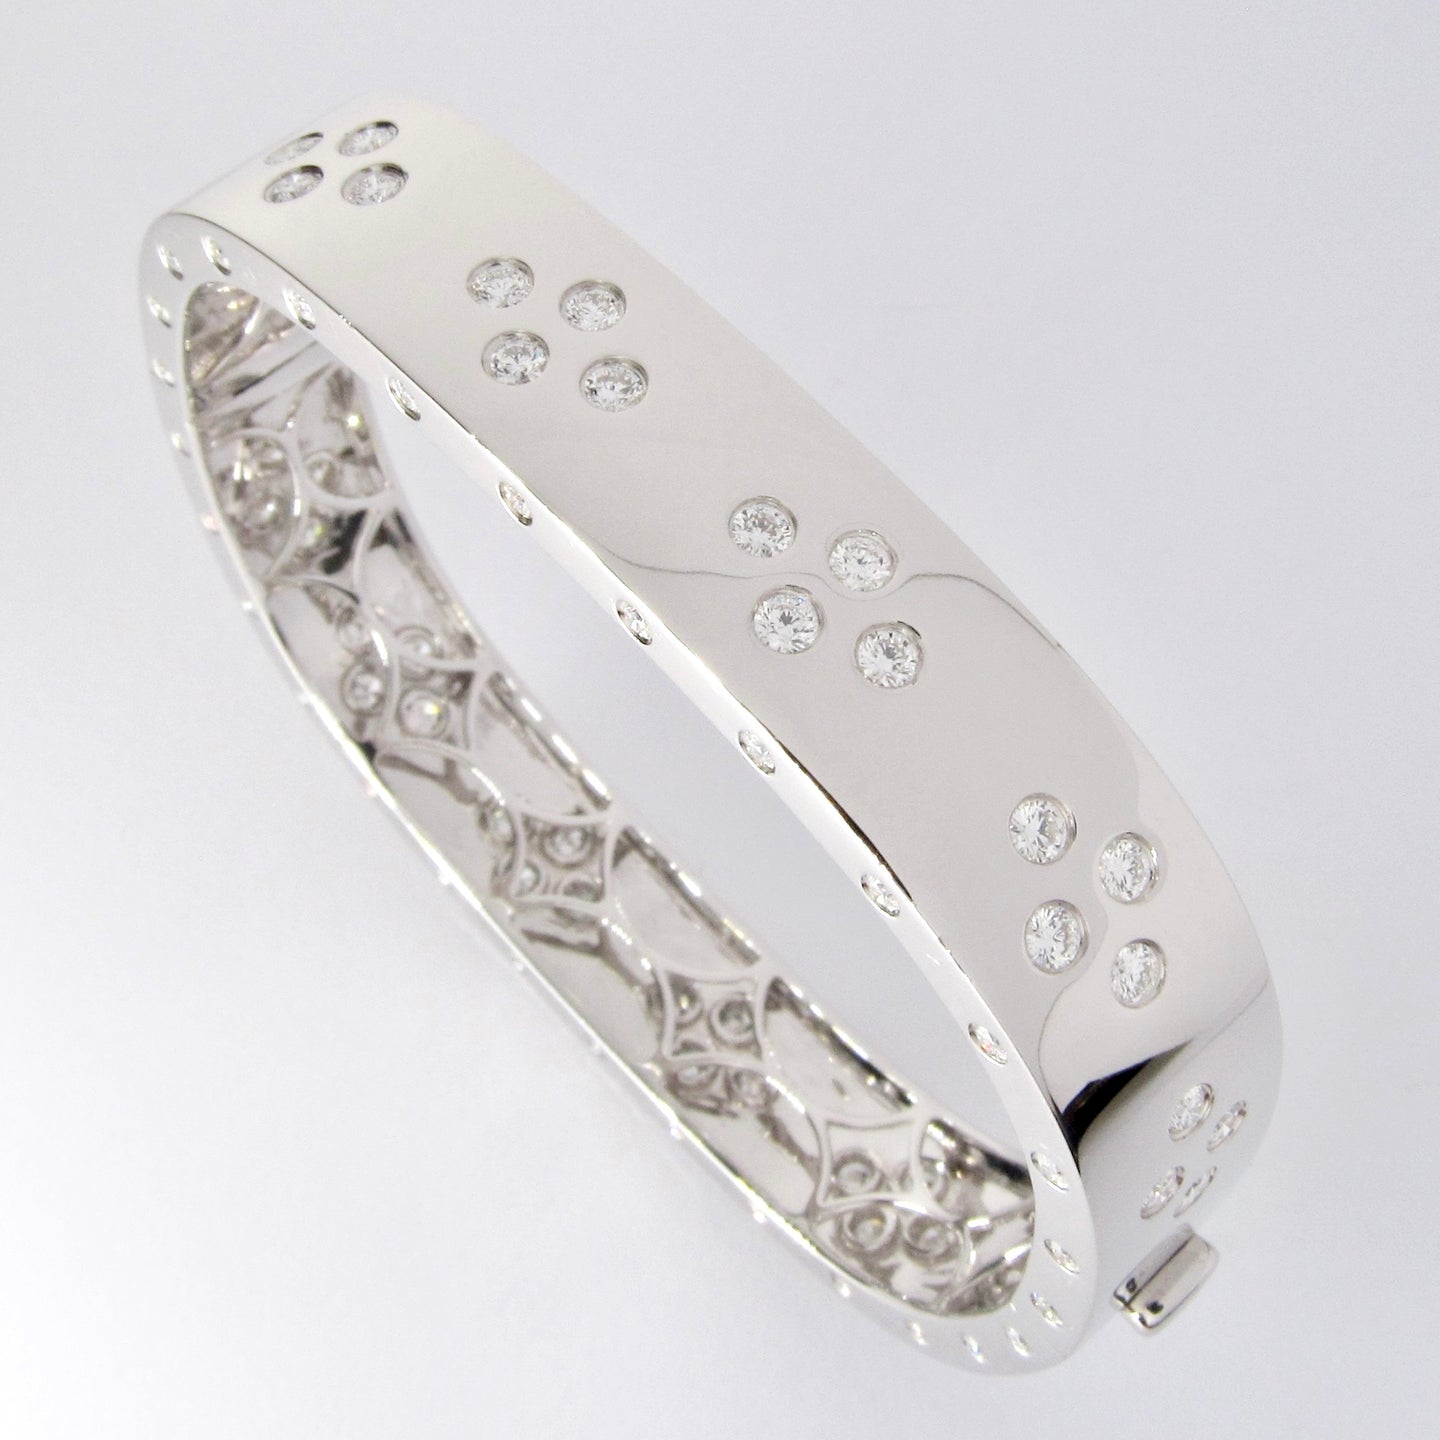 18k White Gold Diamond Bangle Bracelet